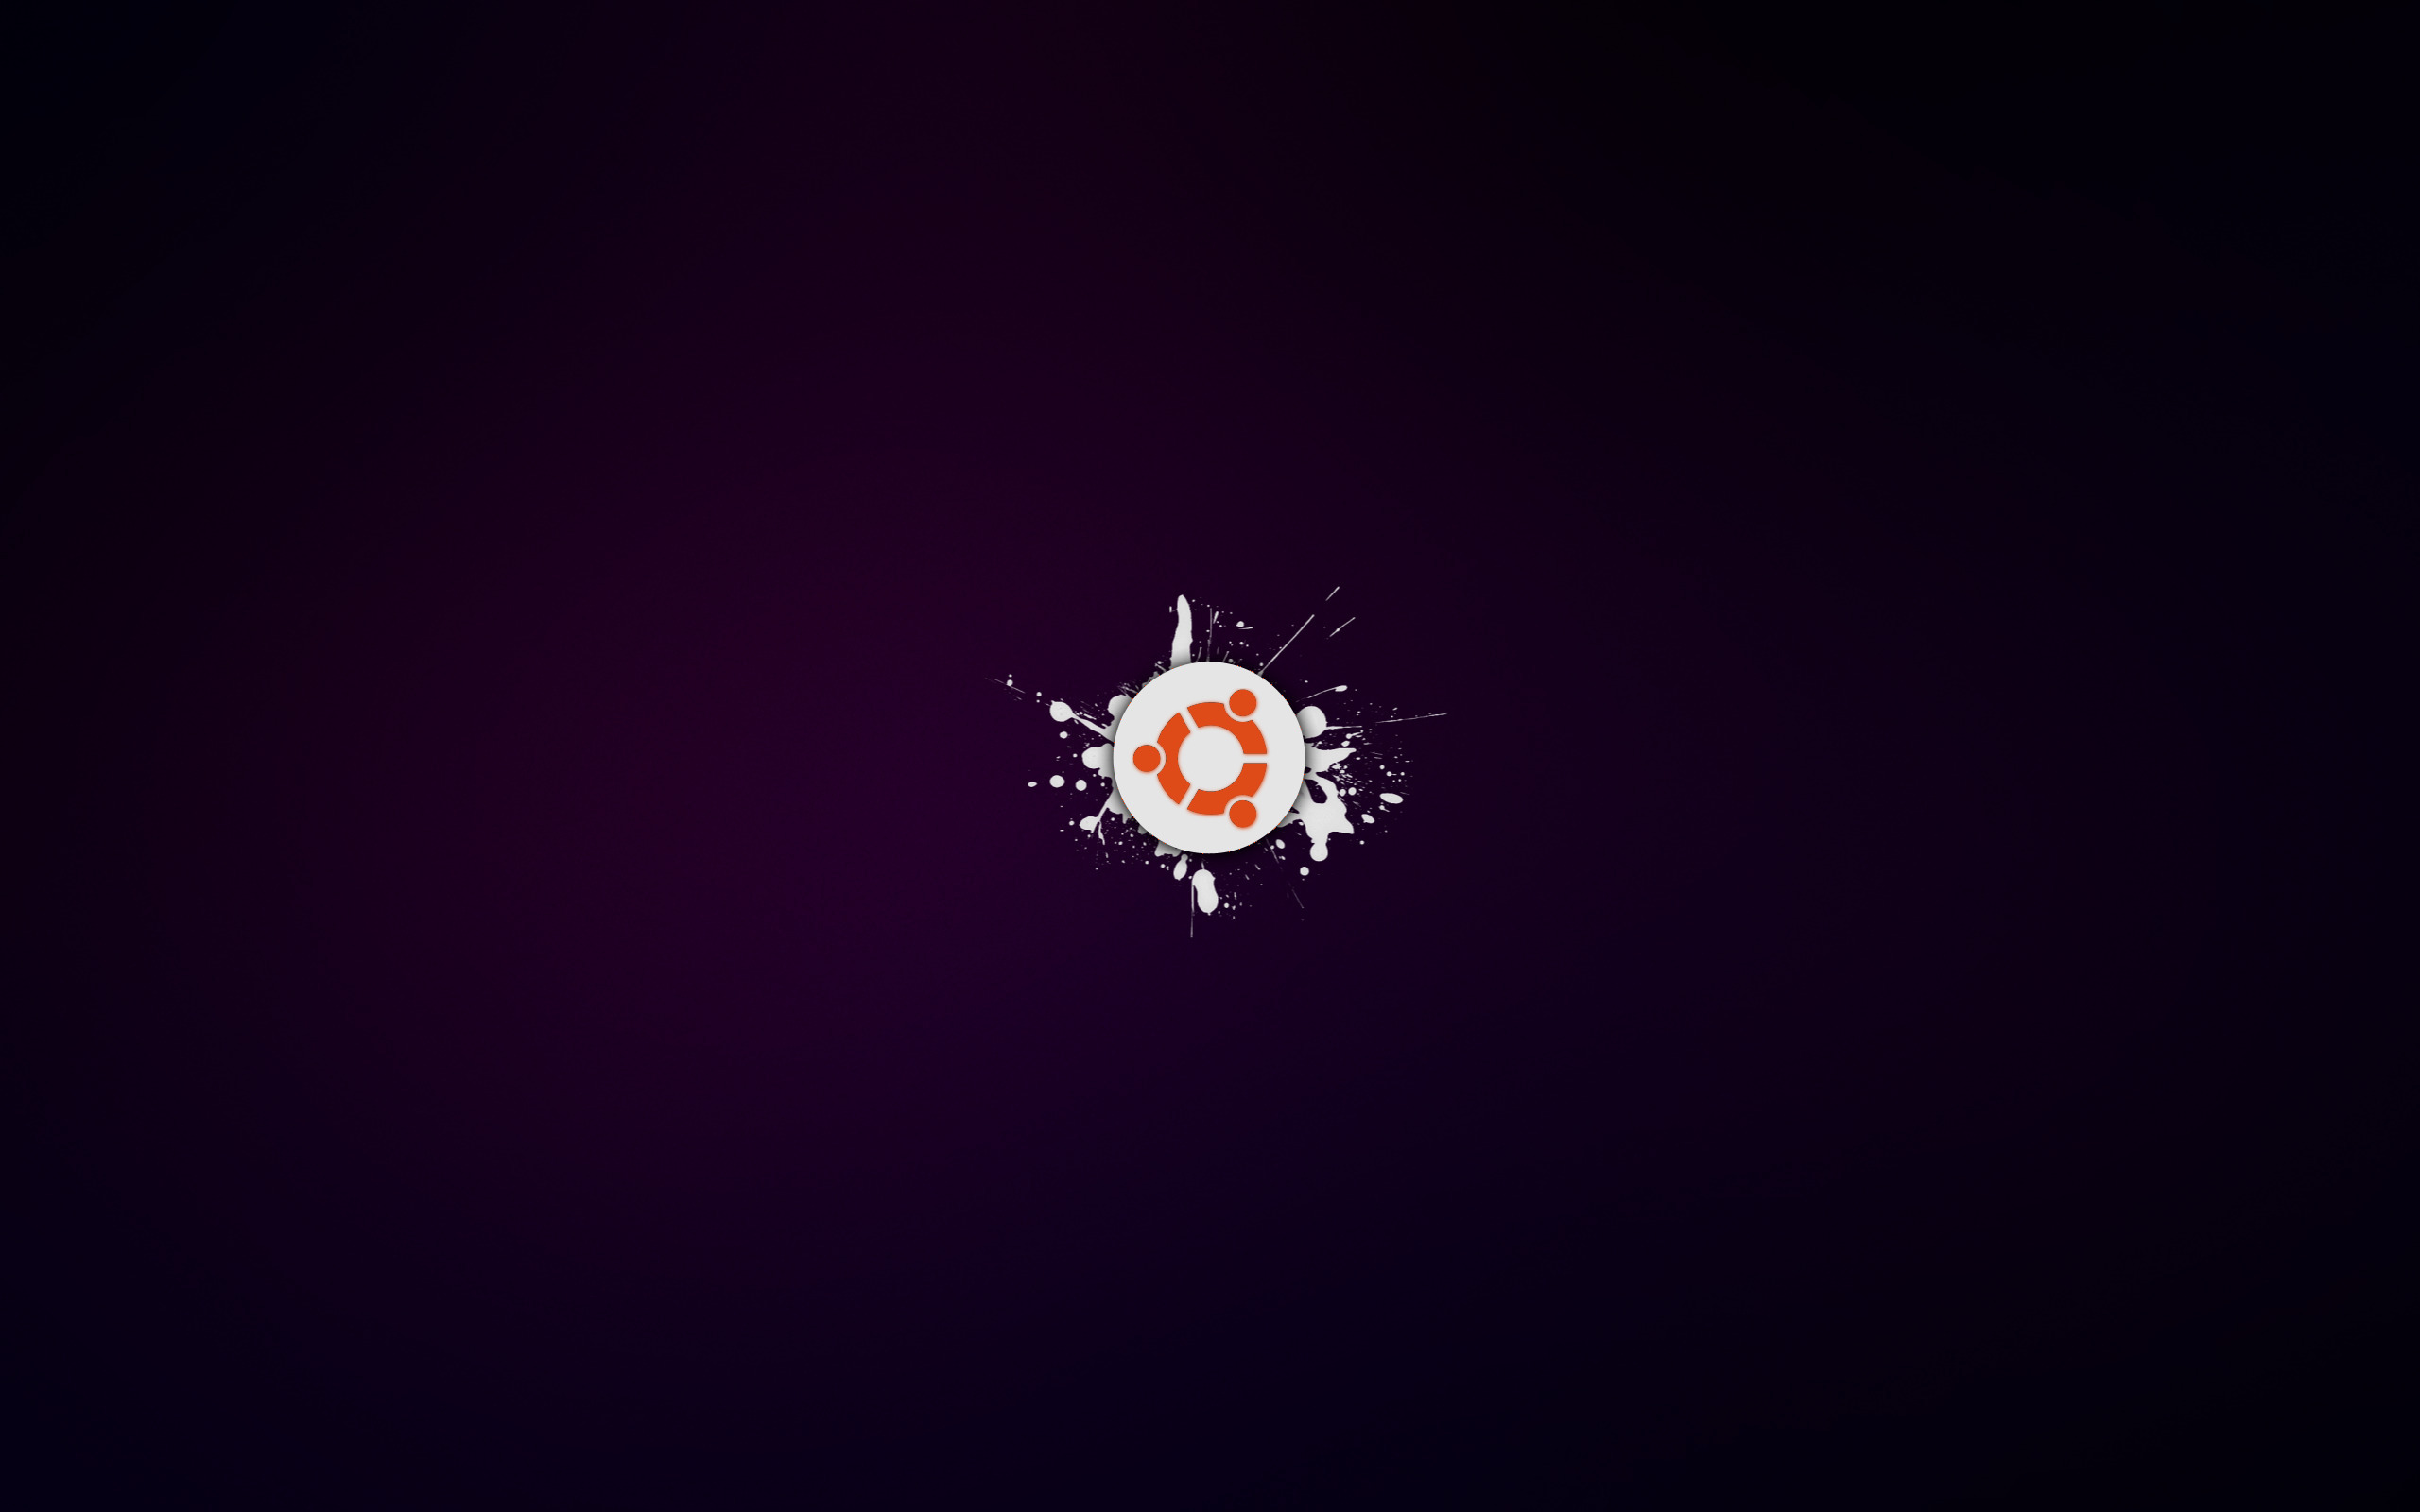 Wallpapers ubuntu logo icon on the desktop